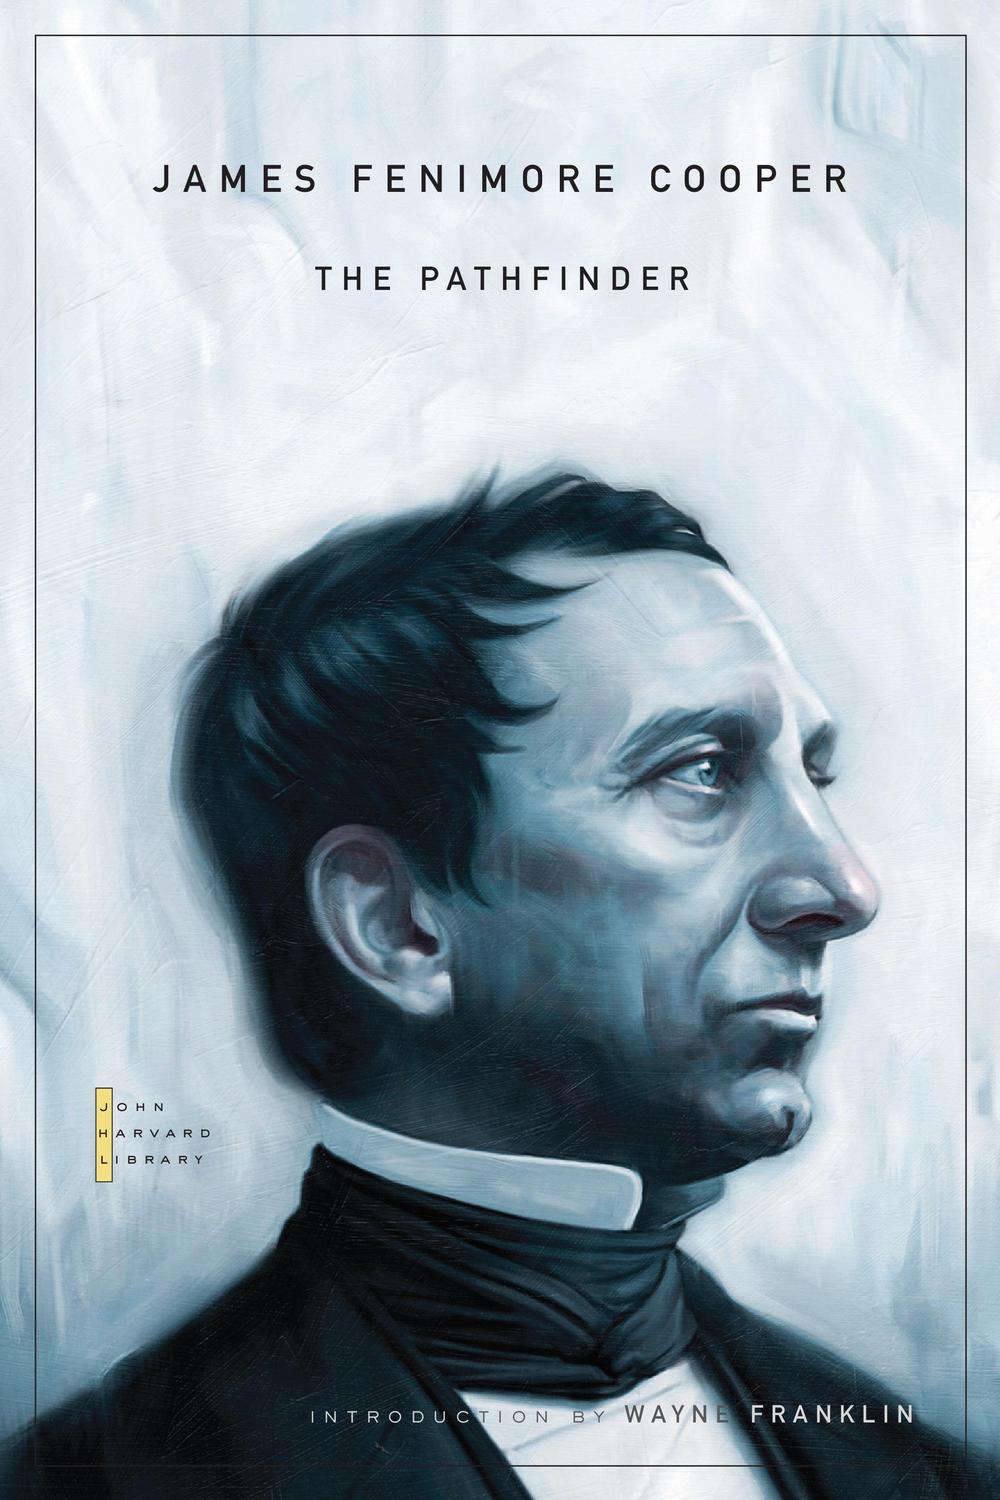 The Pathfinder - James Fenimore Cooper